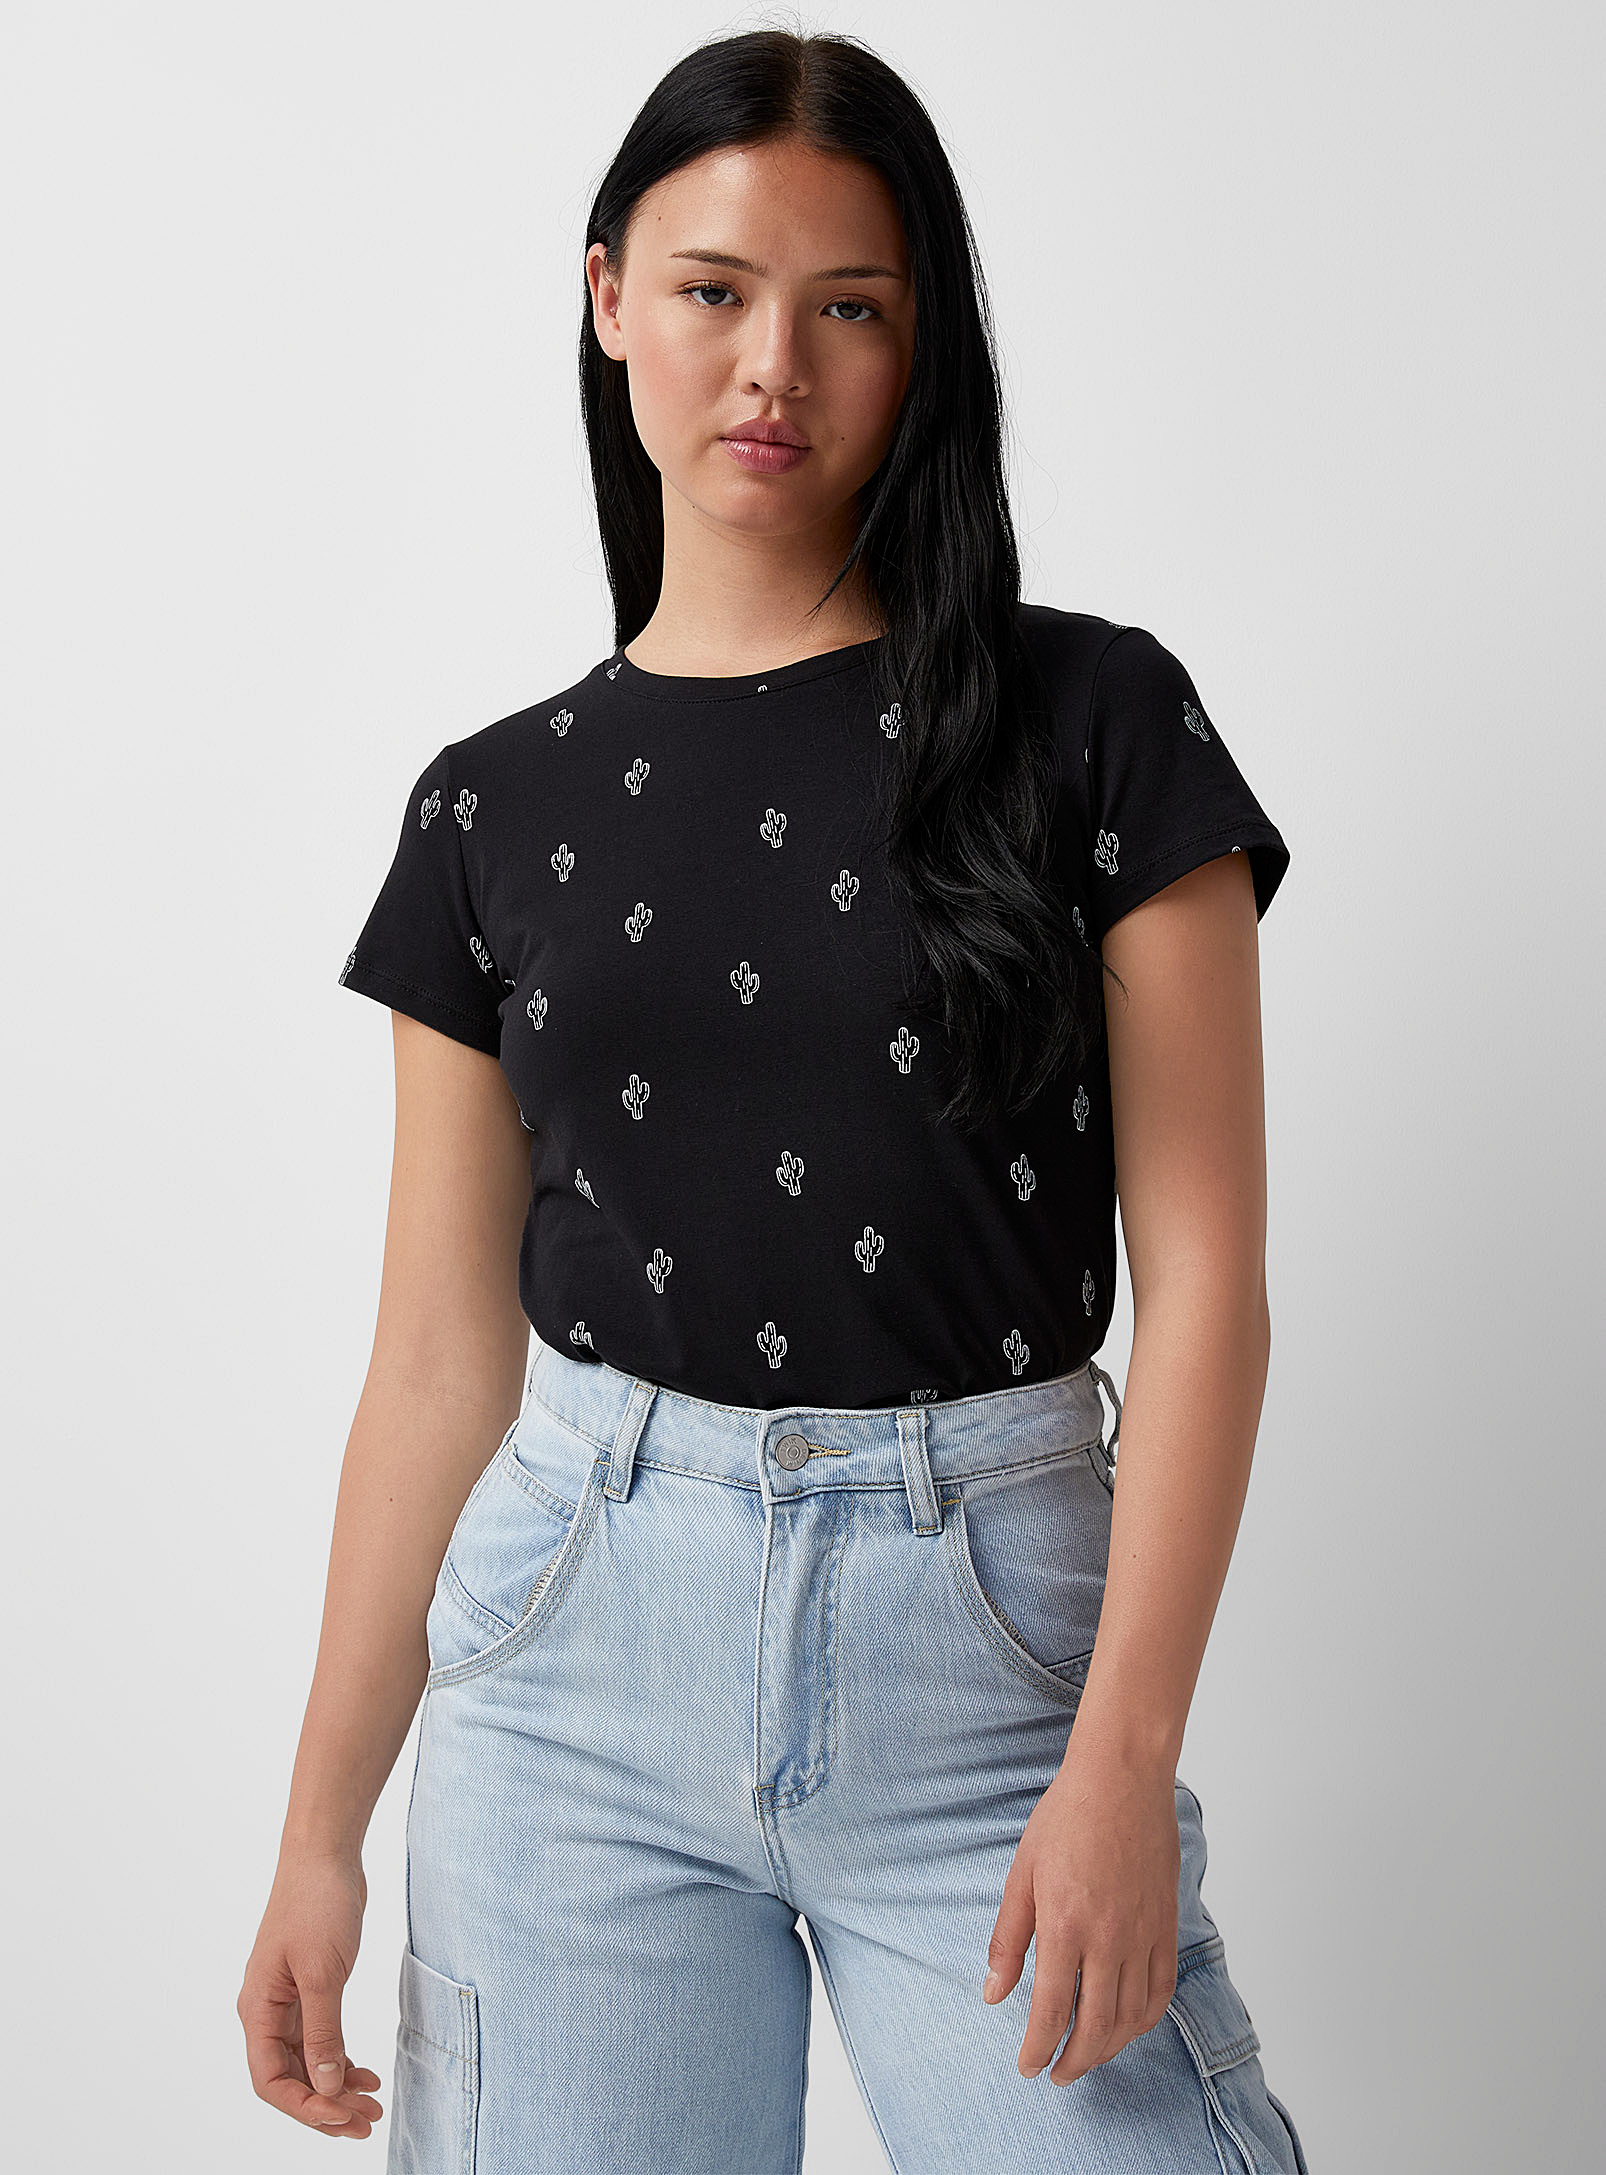 Twik - Women's Organic cotton short-sleeve printed Tee Shirt